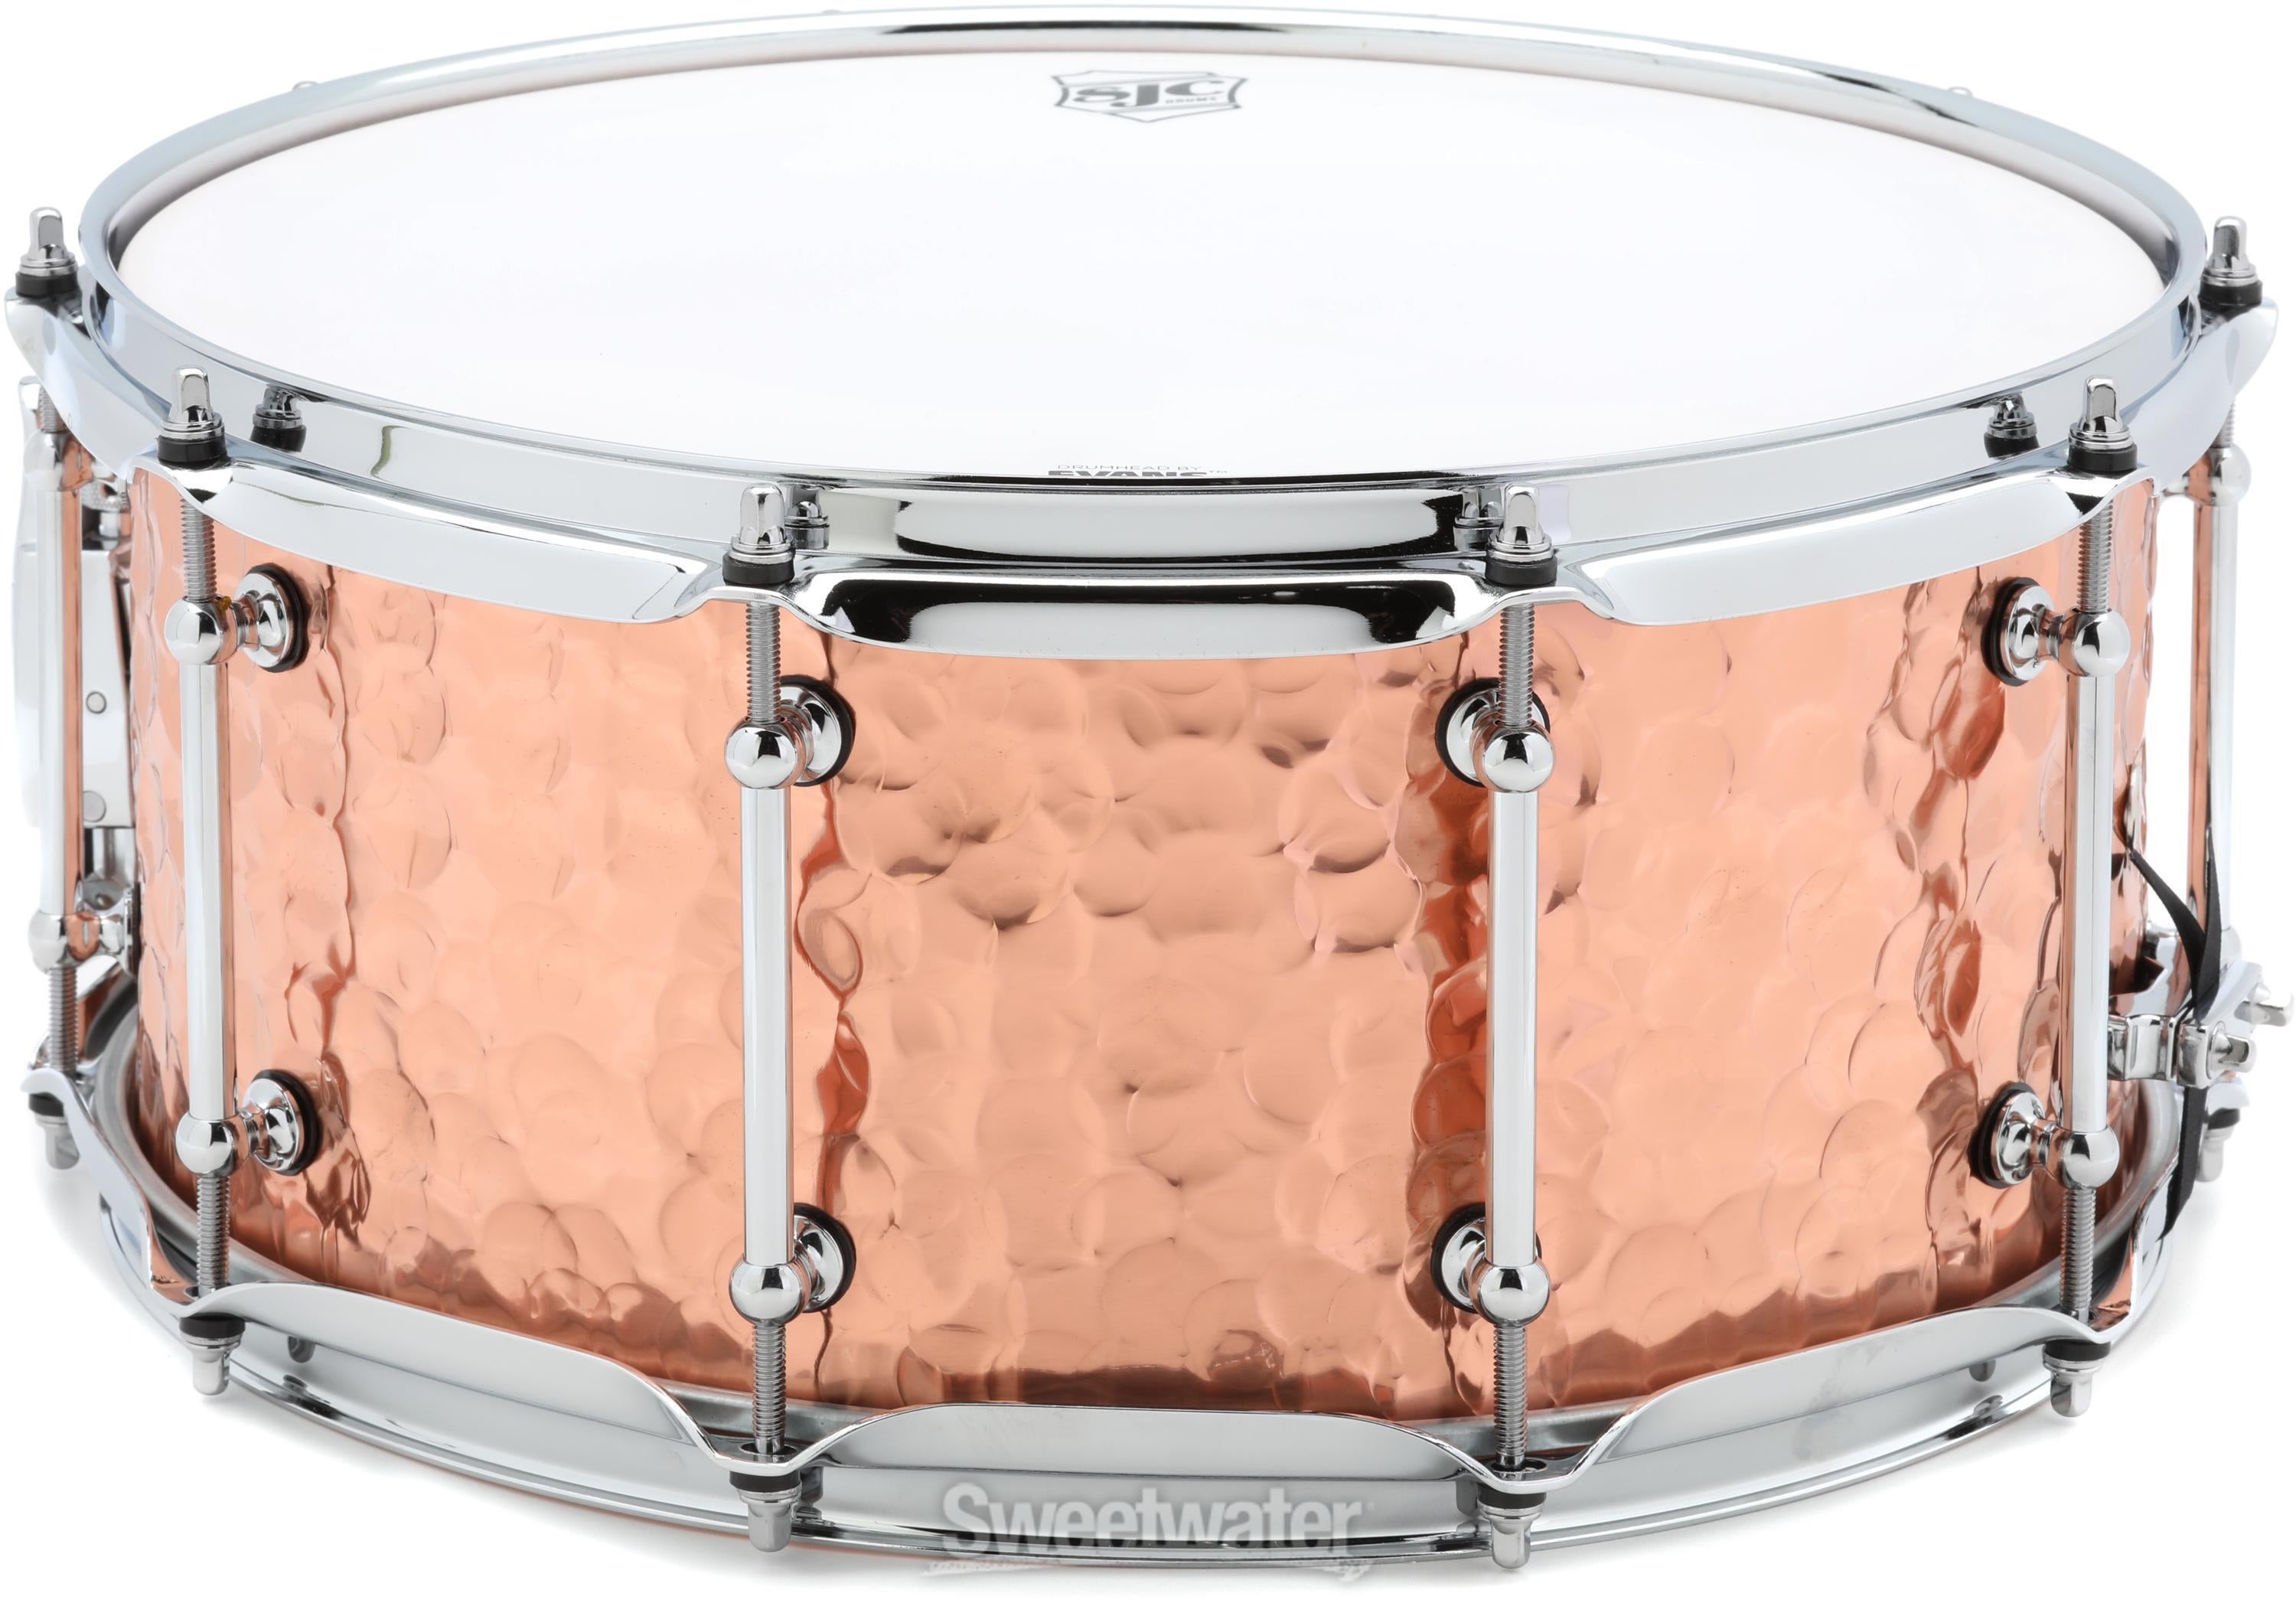 SJC Custom Drums Alpha Hammered Copper Snare Drum - 6.5 x 14-inch 